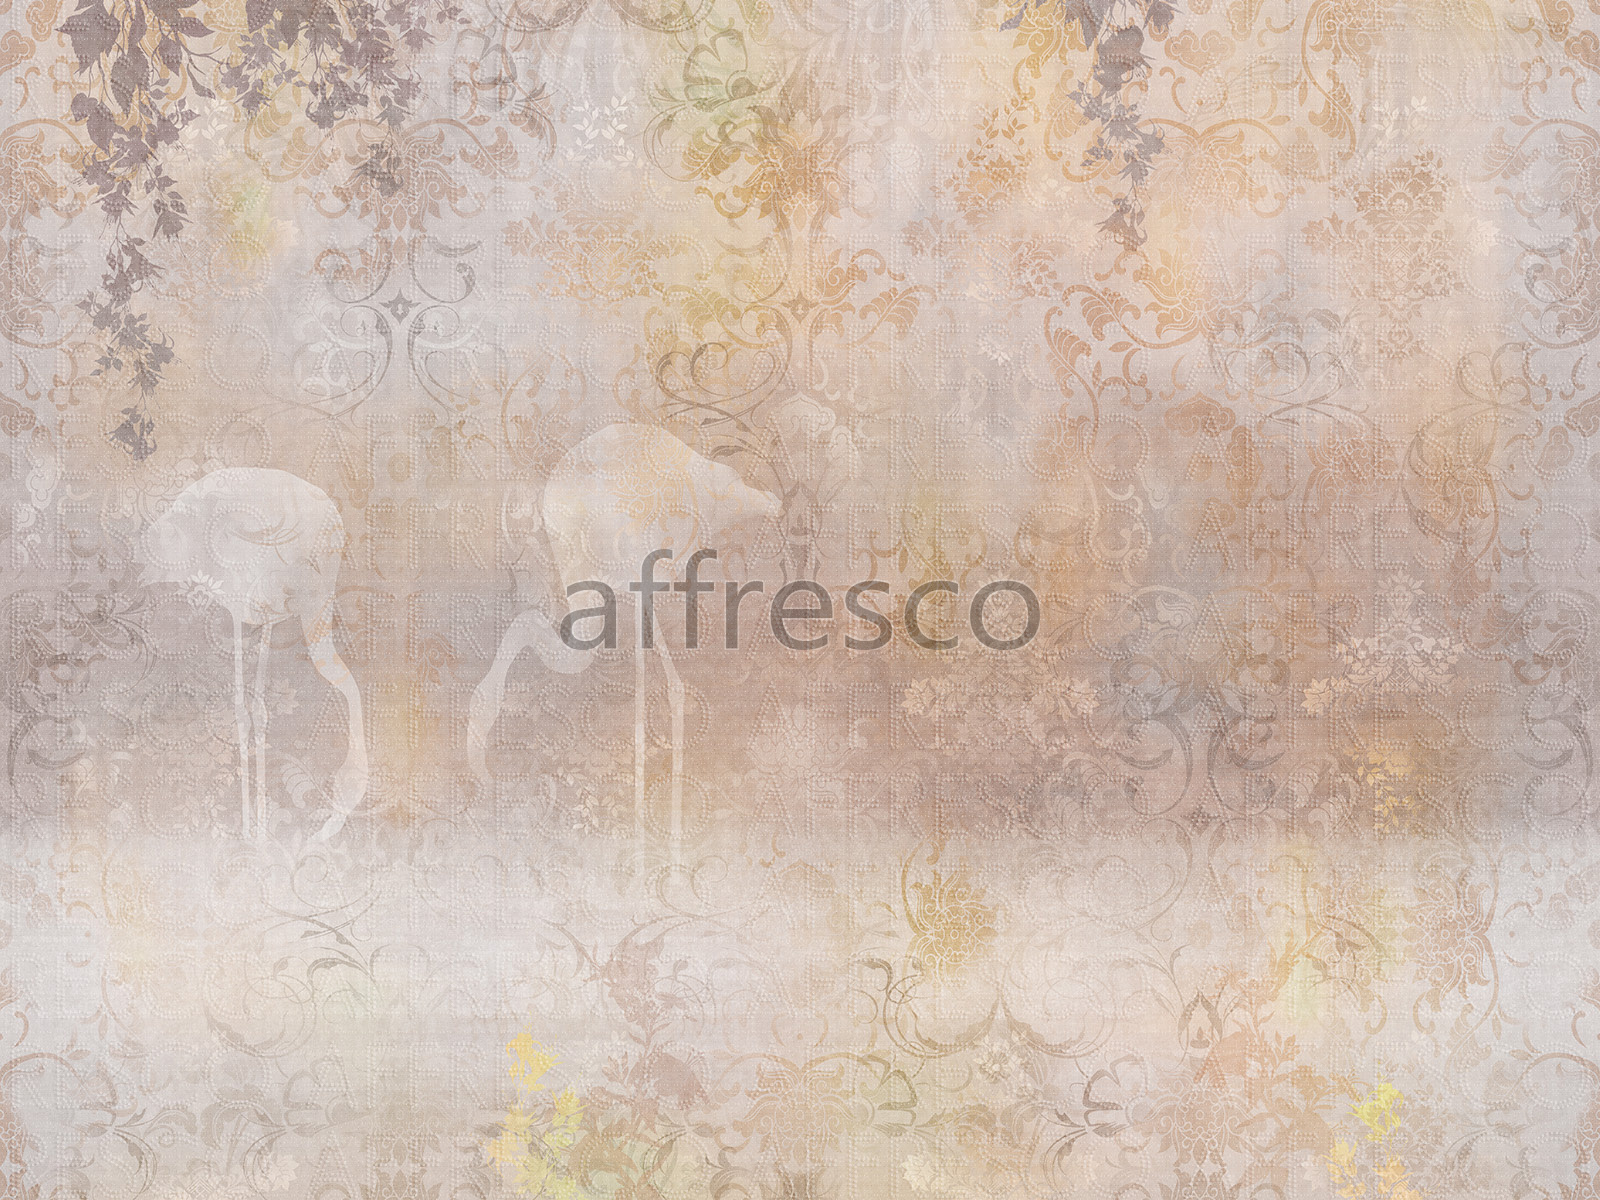 ID456-COL4 | Trend Art | Affresco Factory